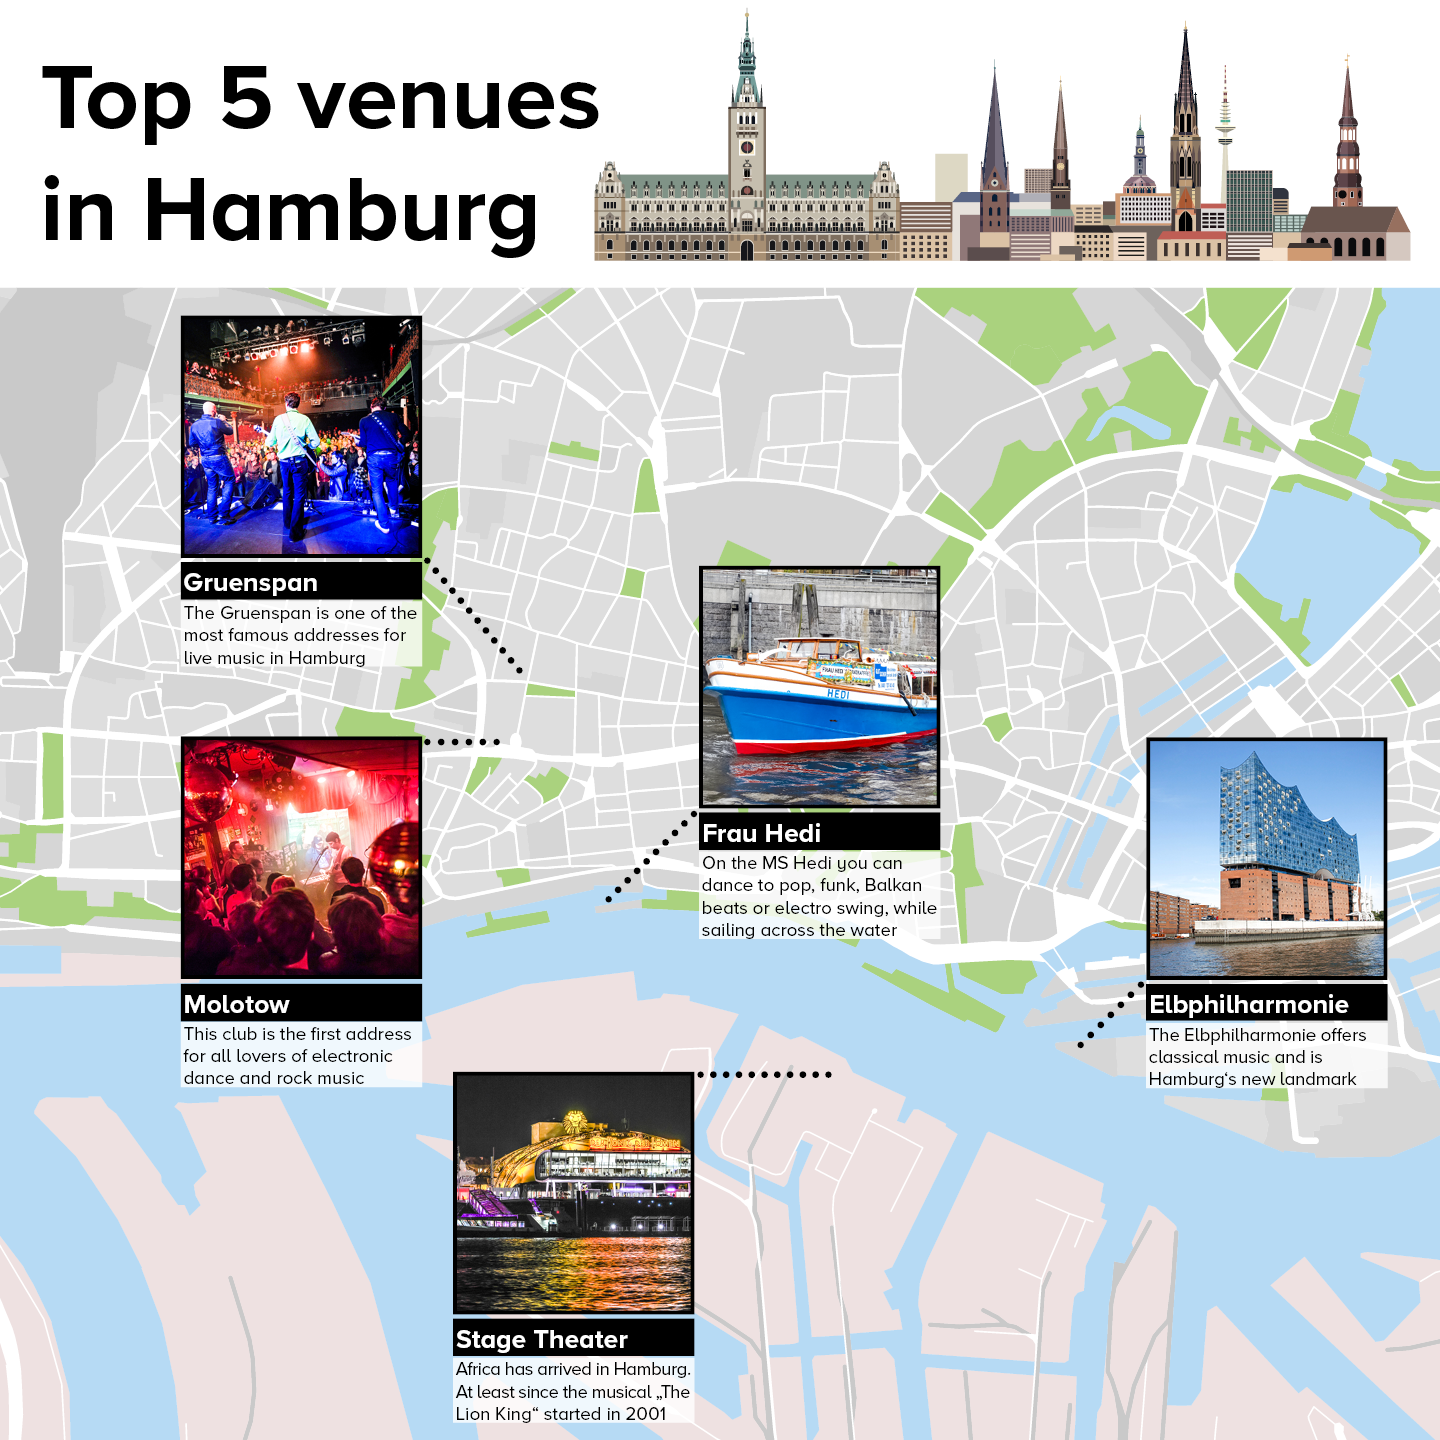 Top 5 venues in Hamburg